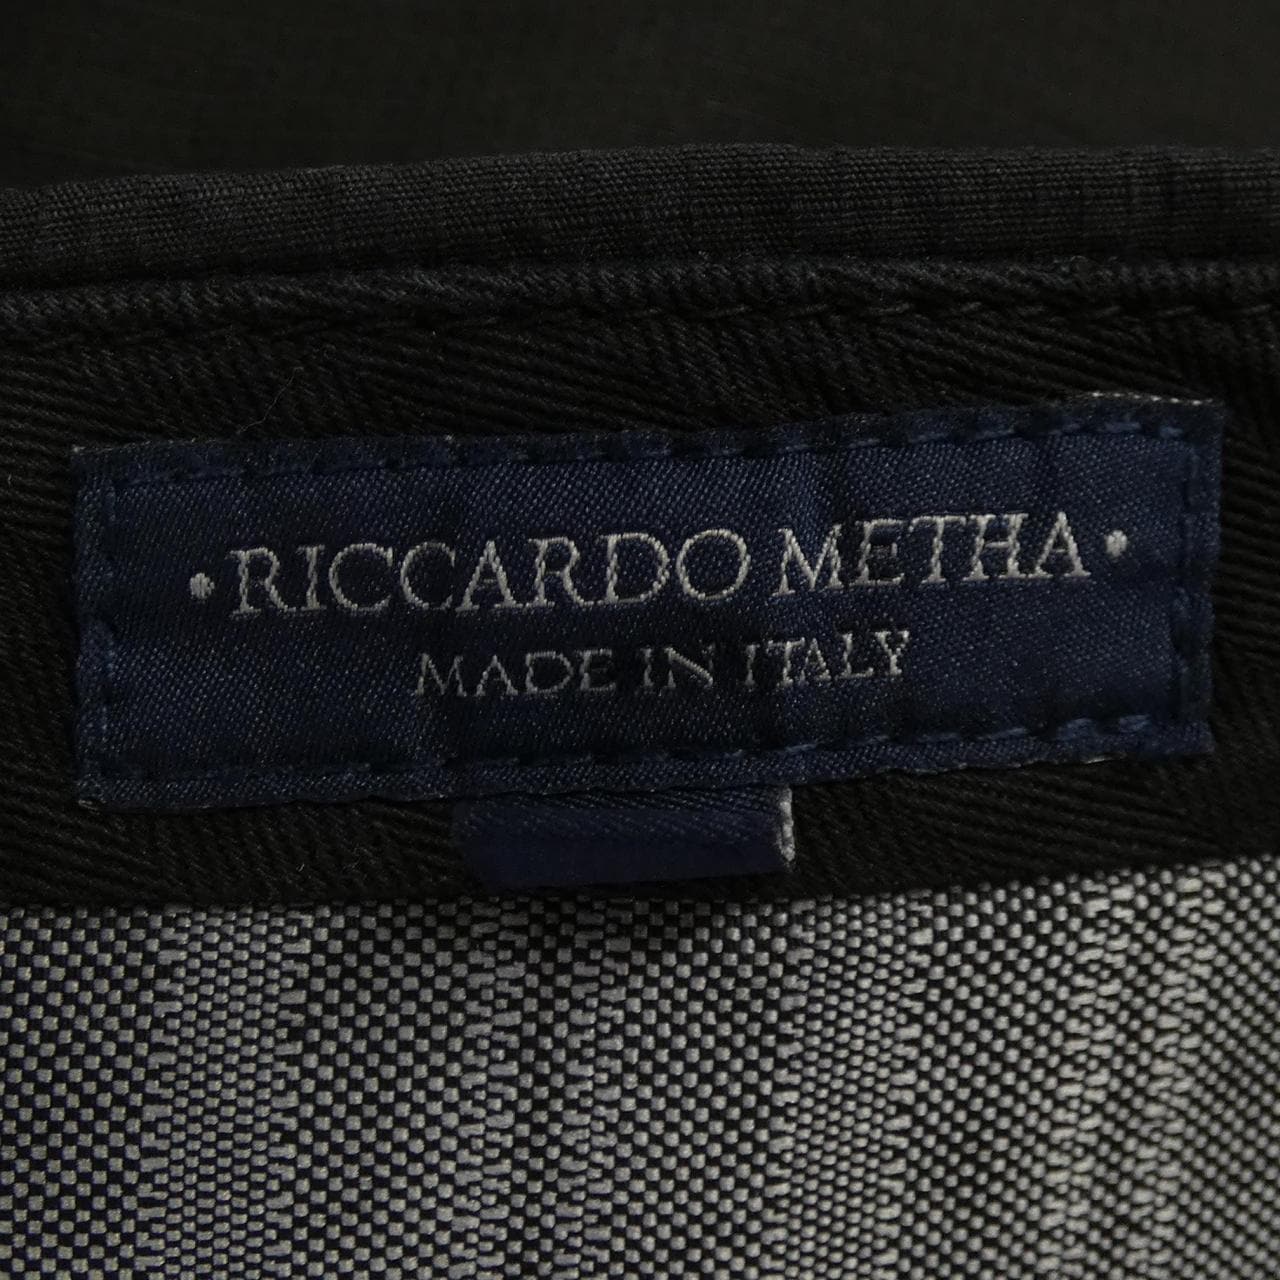 RICCARDO METHA Pants